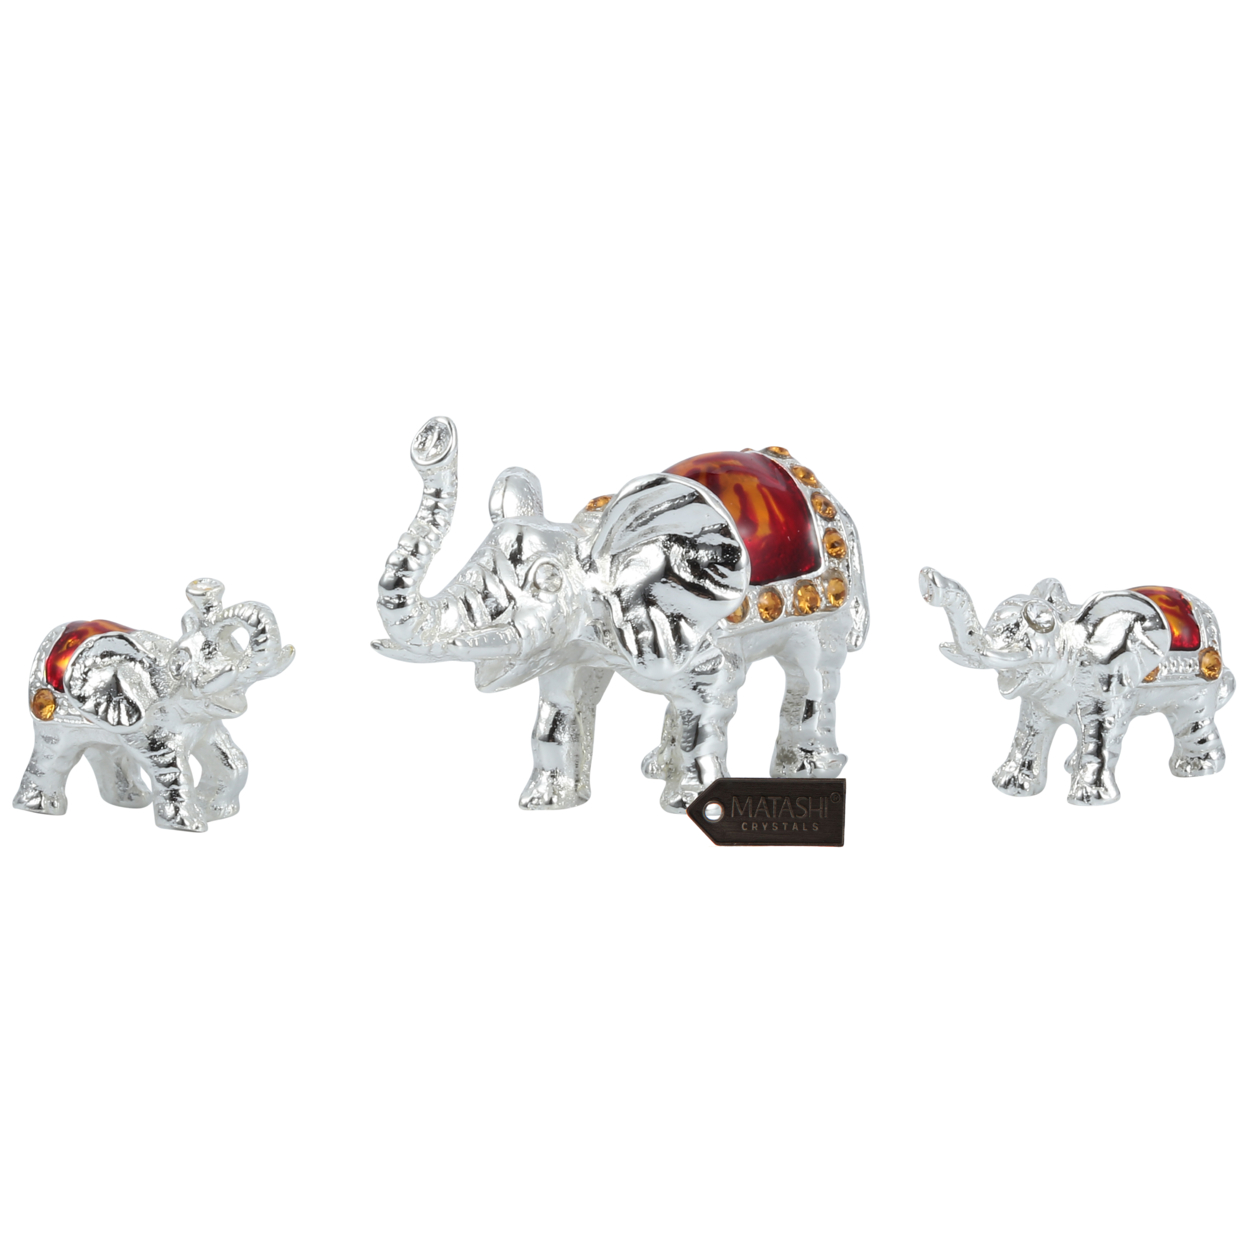 Matashi Silver Plated Crystal Studded Family Of Elephants Ornaments